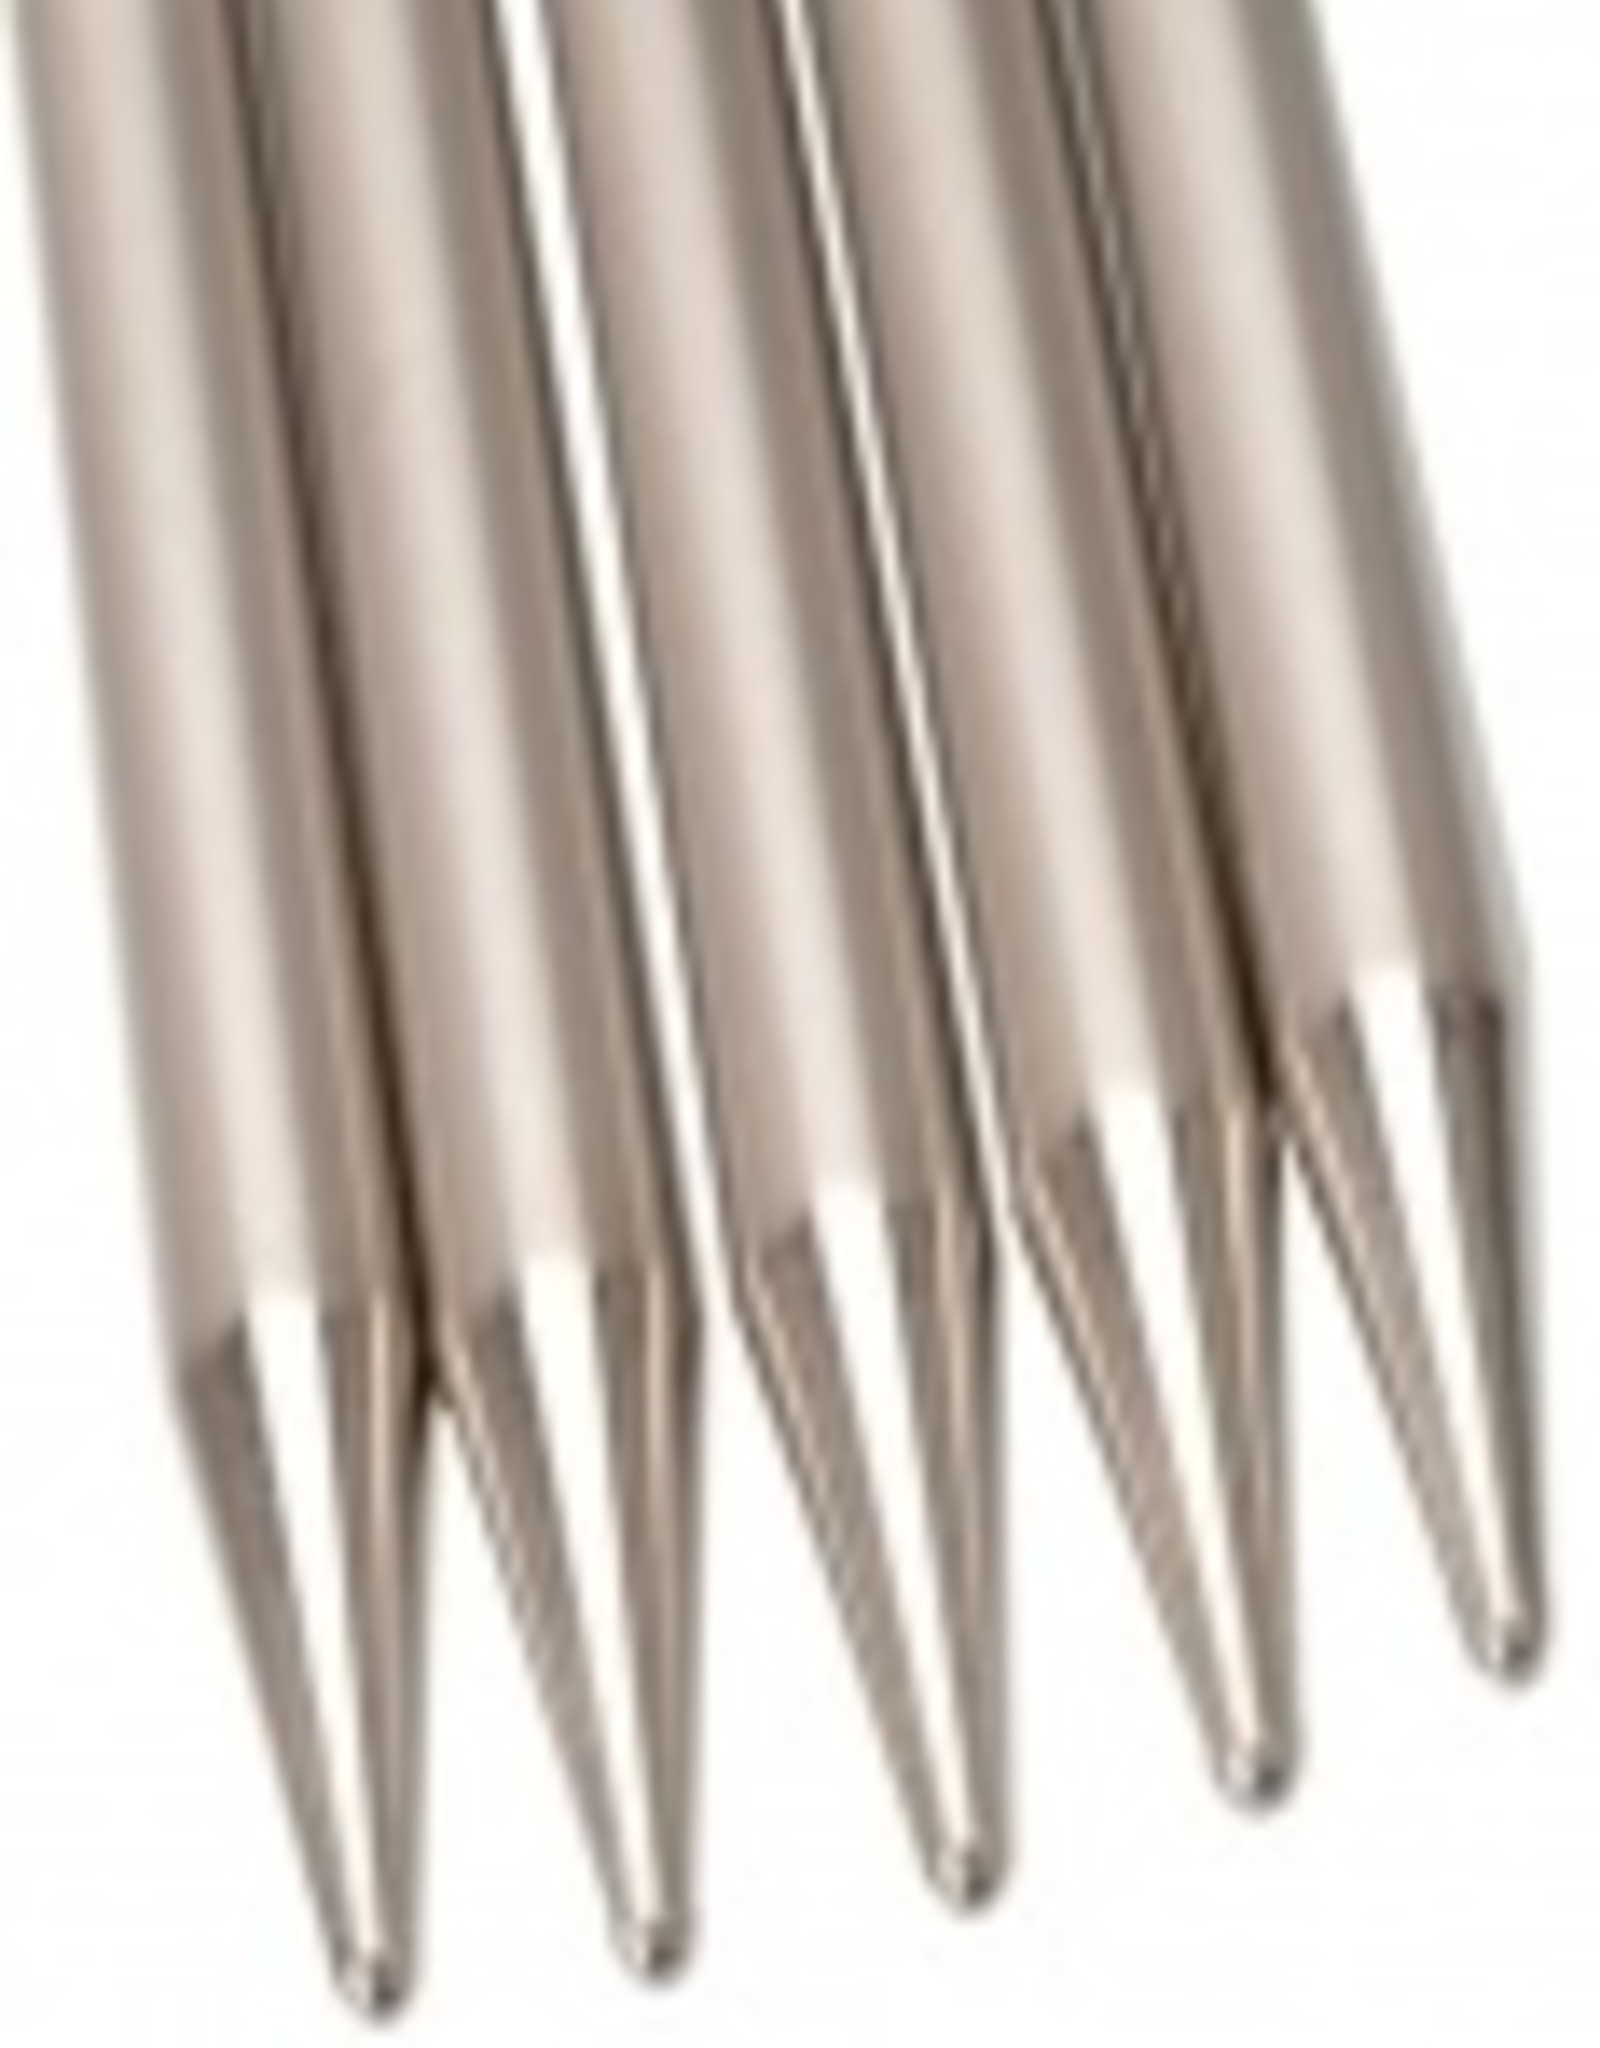 ChiaoGoo ChiaoGoo Stainless Steel 6" Double Point Needles (DPN)